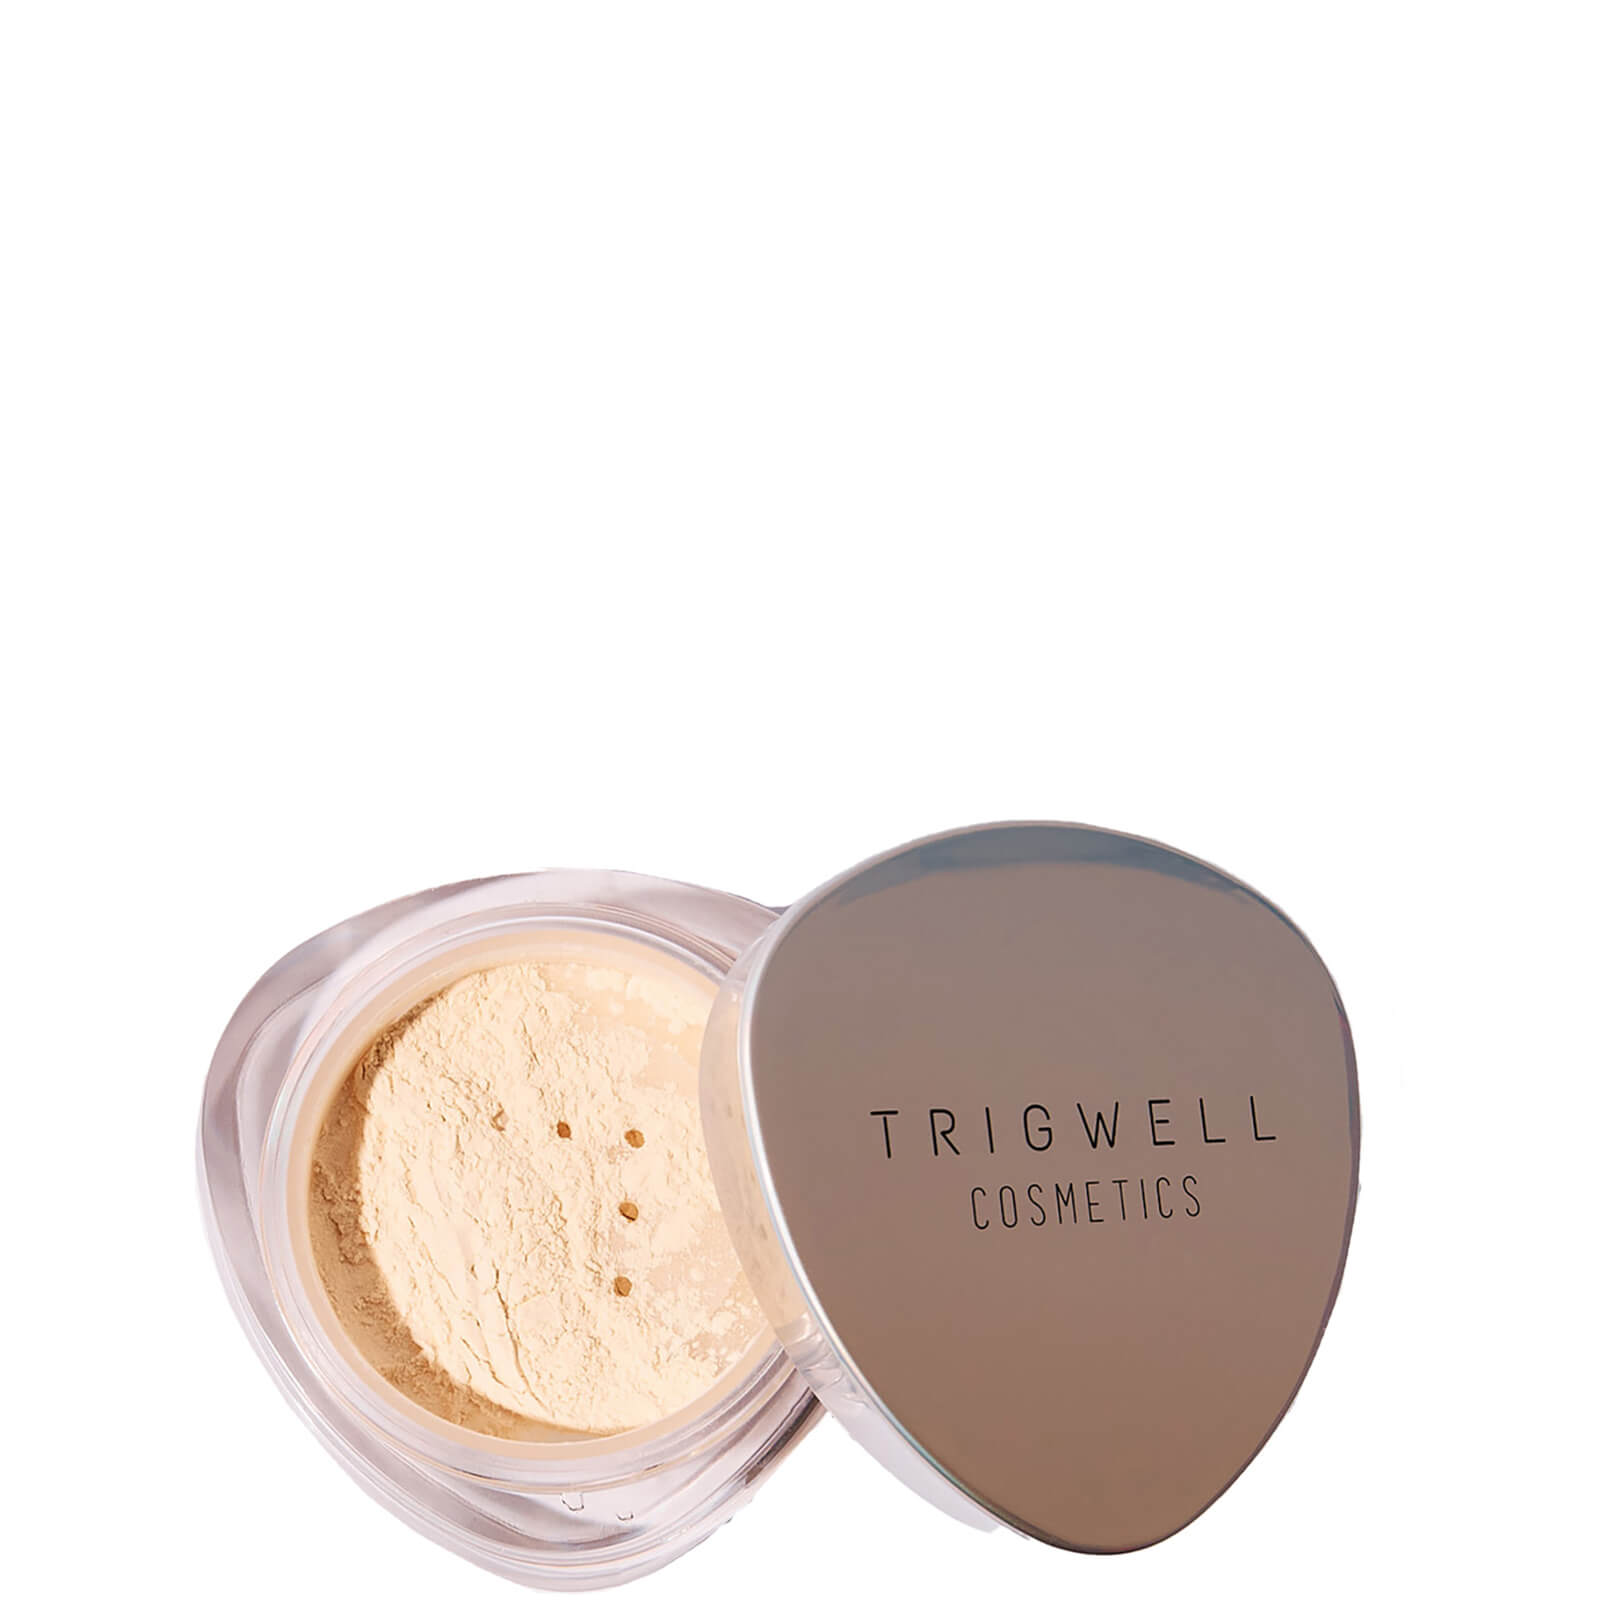 Trigwell Cosmetics Velvet Setting Powder 8g (various Shades) - Shade 1 In White